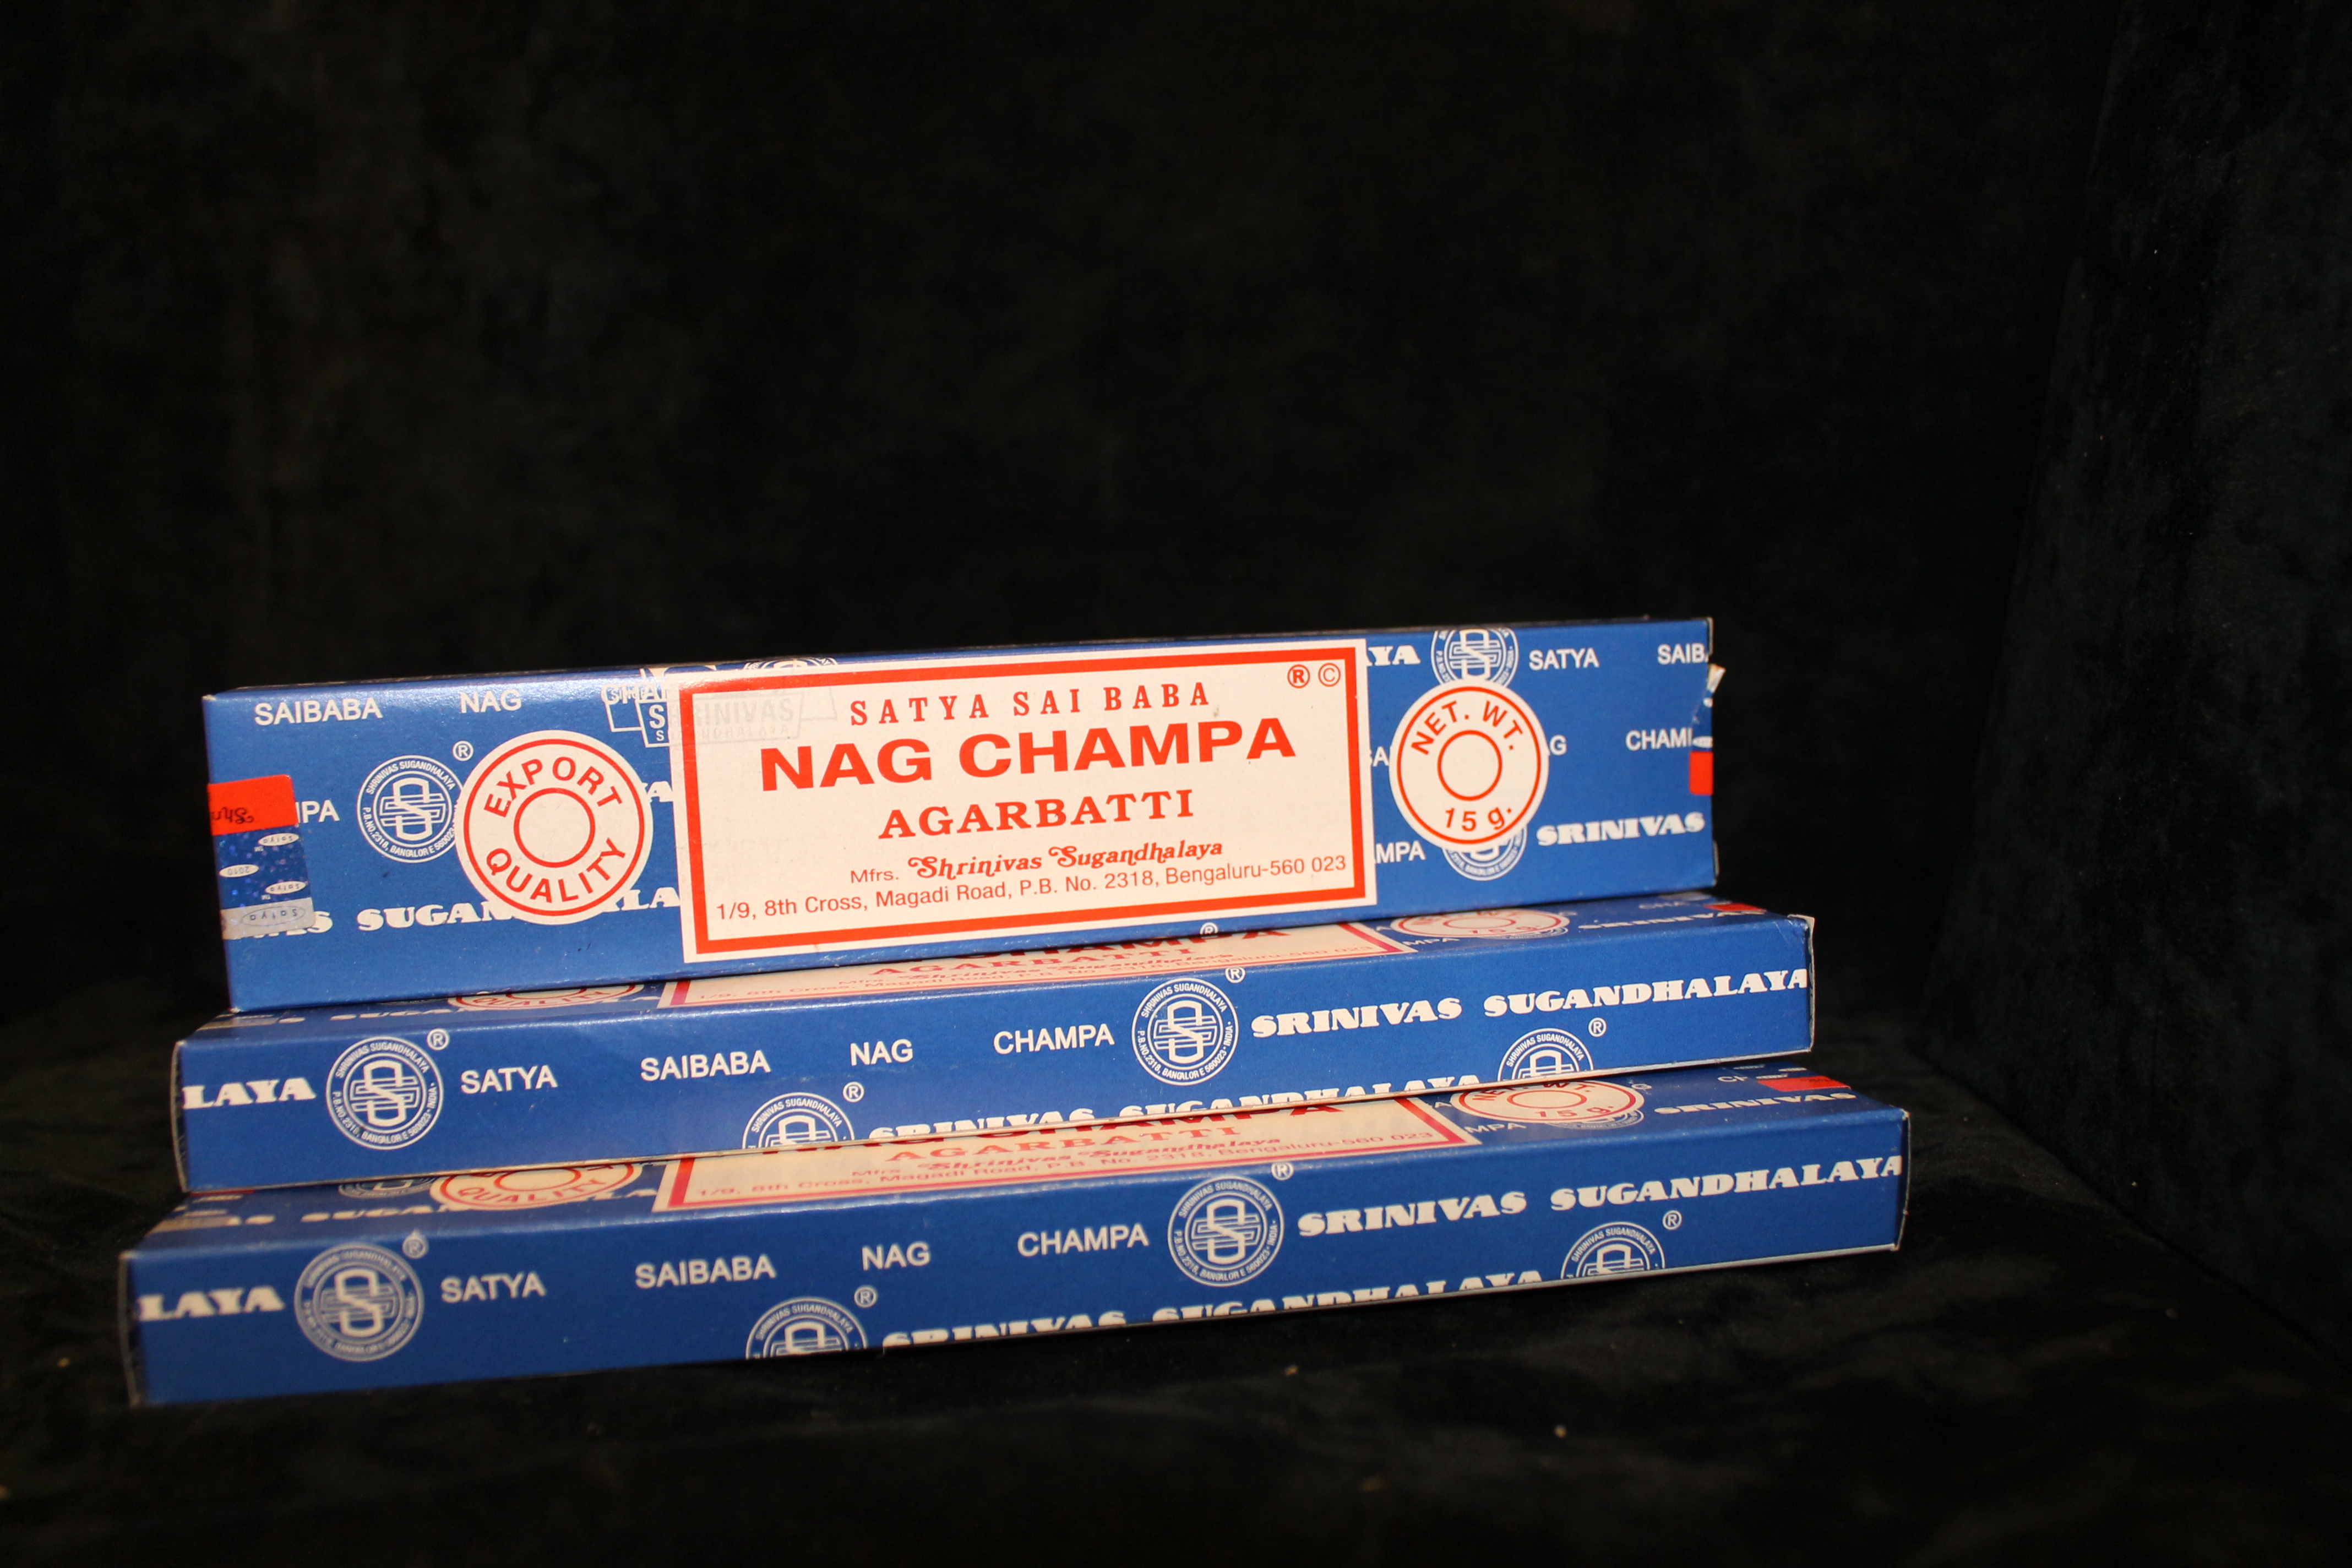 best nag champa incense